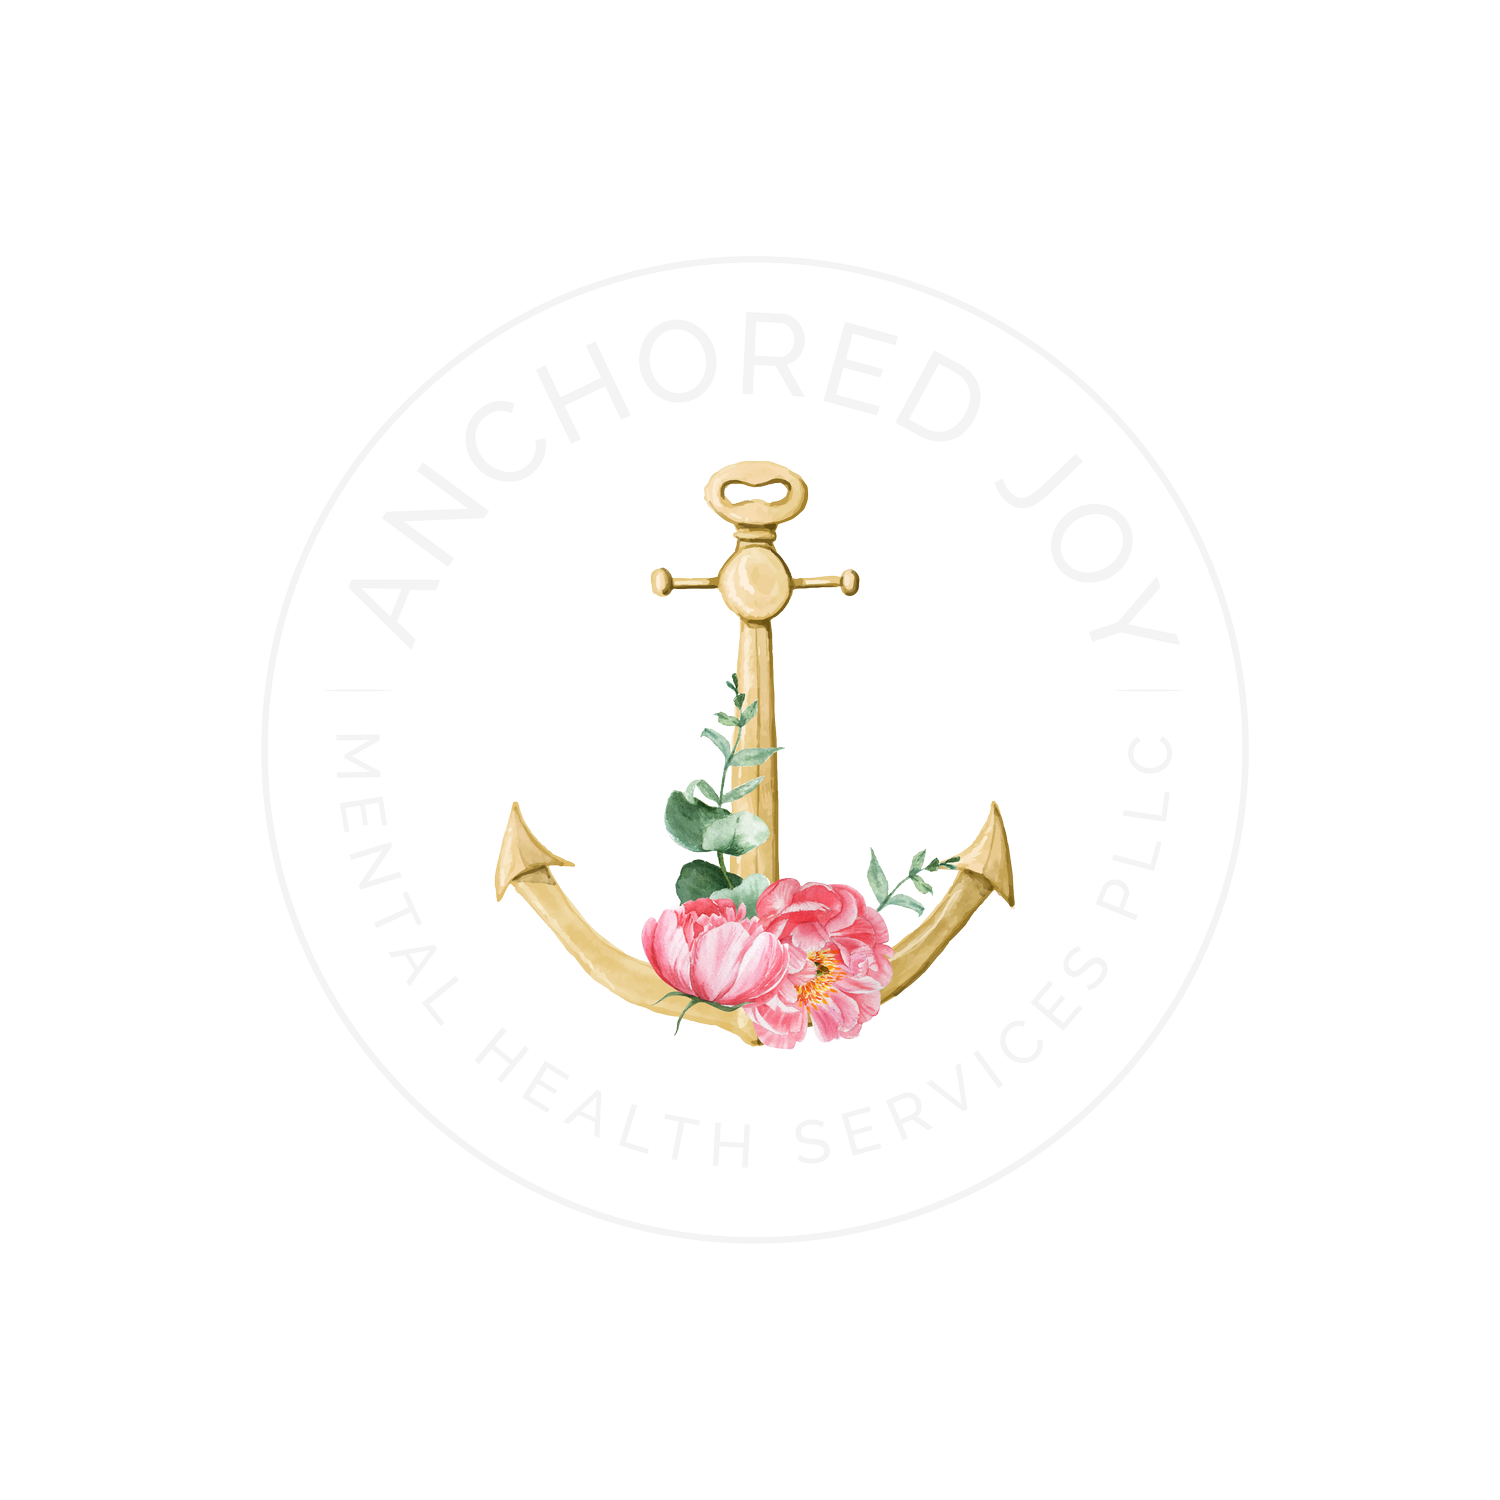 Anchored Joy Mental Health Services PLLC